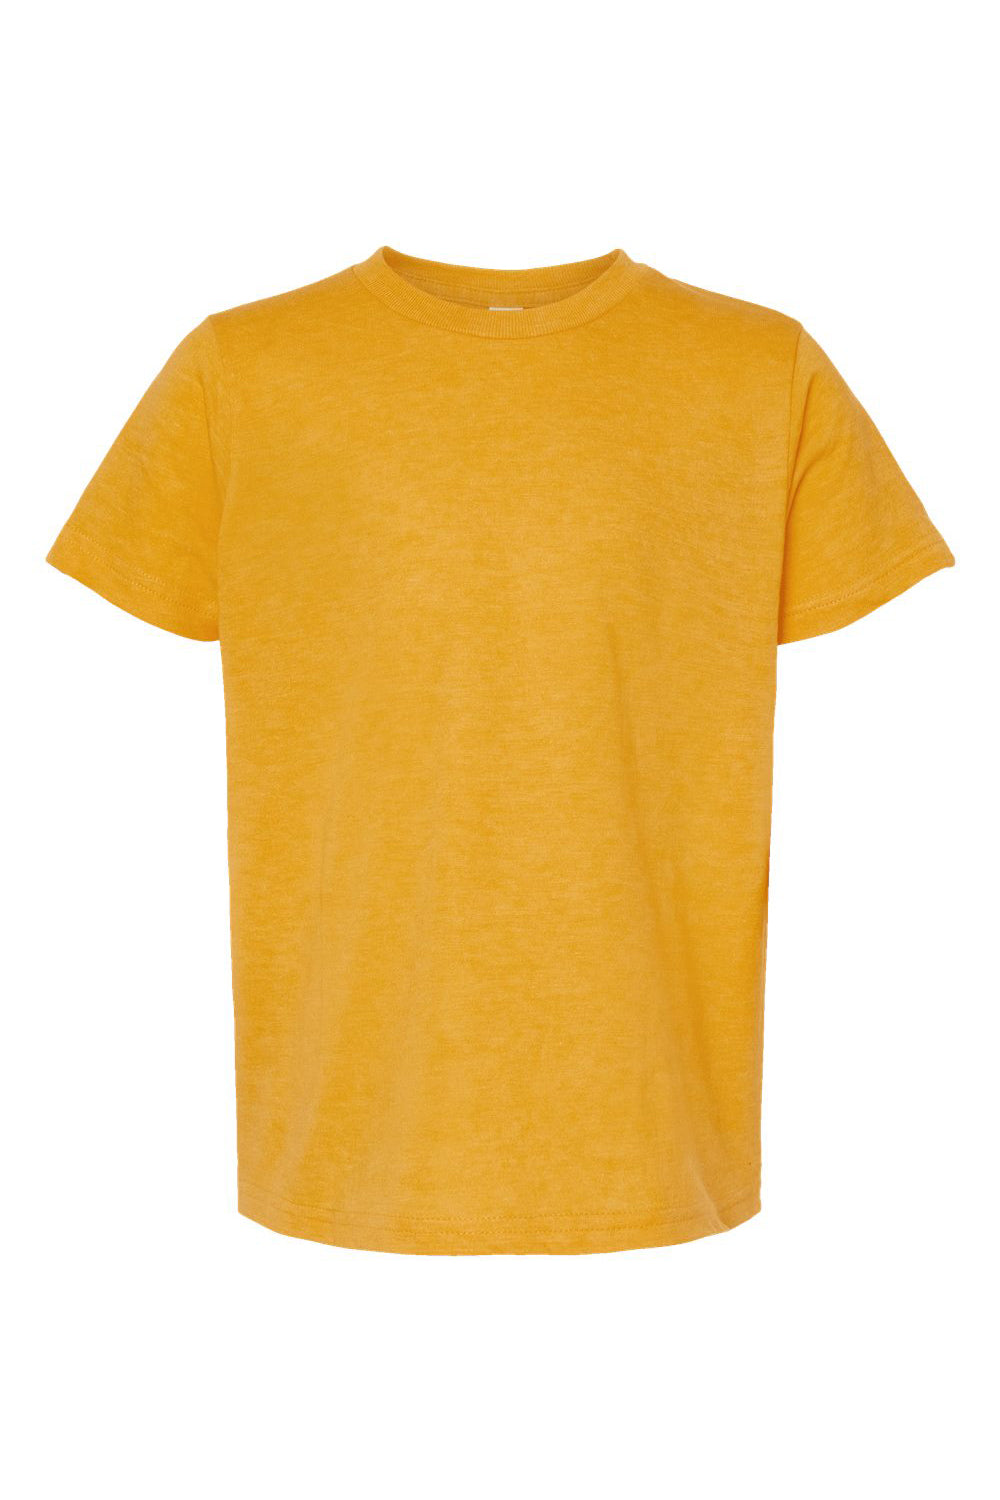 Tultex 235 Youth Fine Jersey Short Sleeve Crewneck T-Shirt Heather Mellow Yellow Flat Front